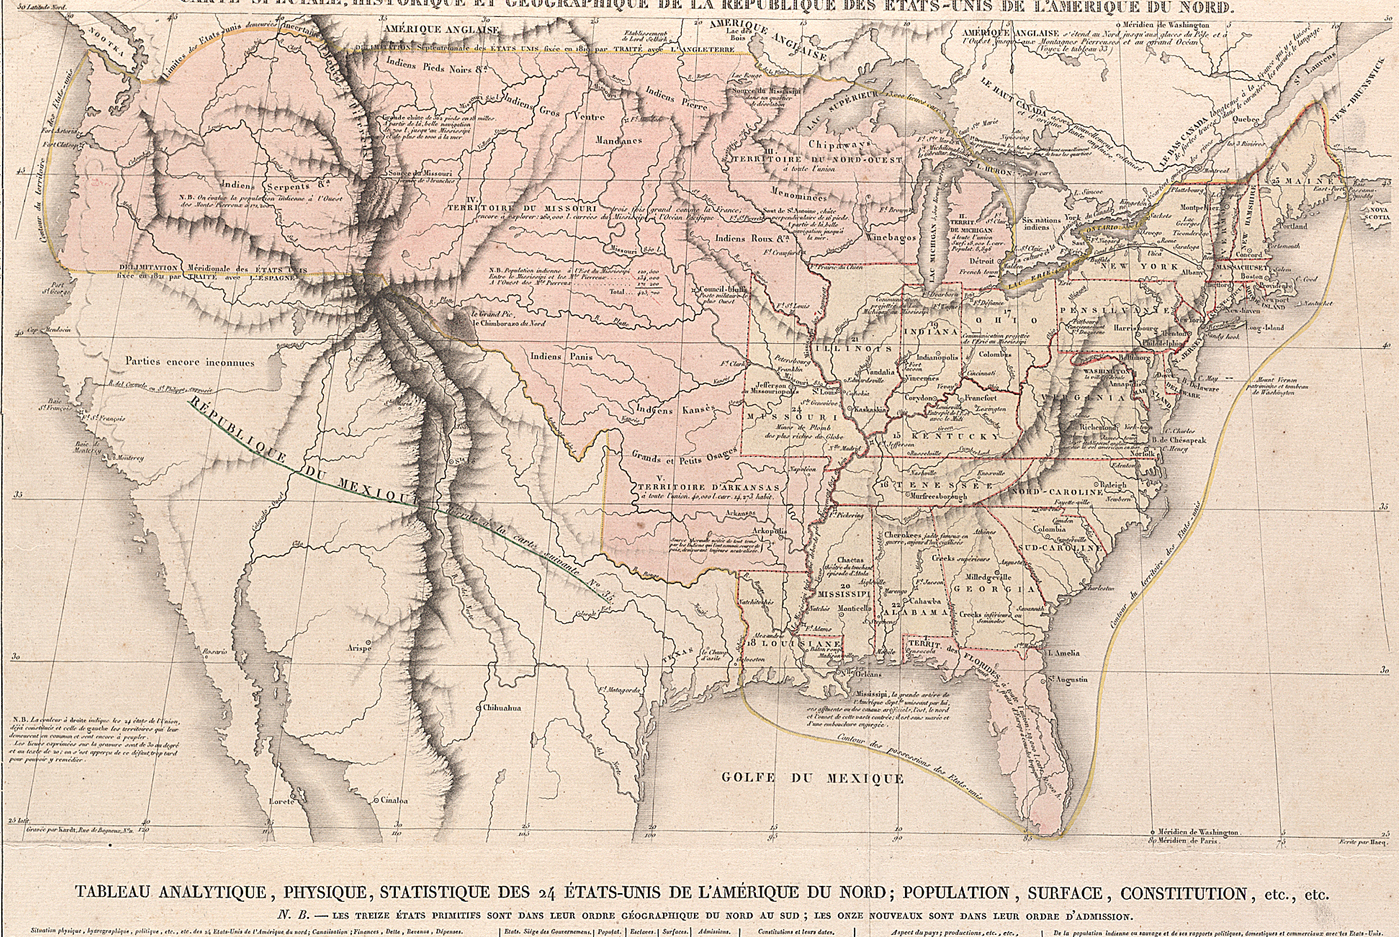 Louisiana Territory opened to Americans